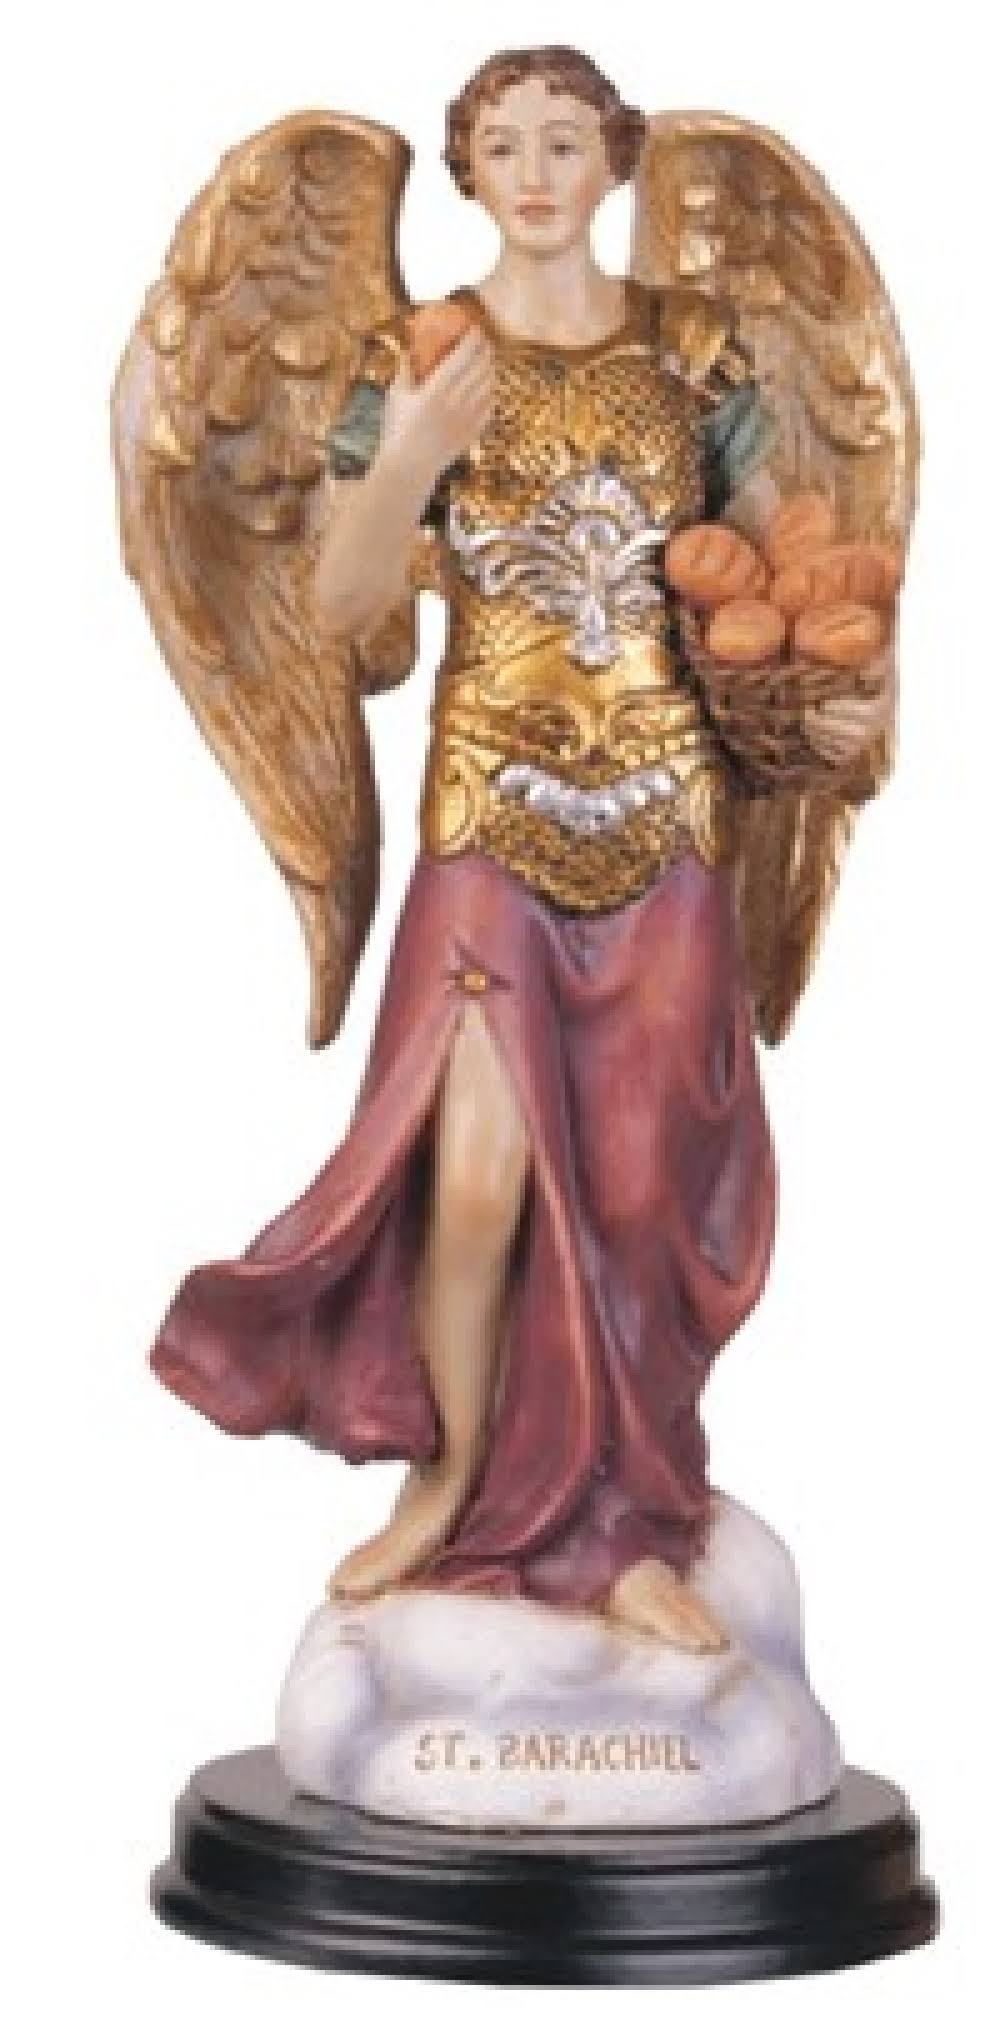 Stealstreet Ss-g-205.53 Archangel Barachiel Holy Figurine Religious Decoration Statue, 5"